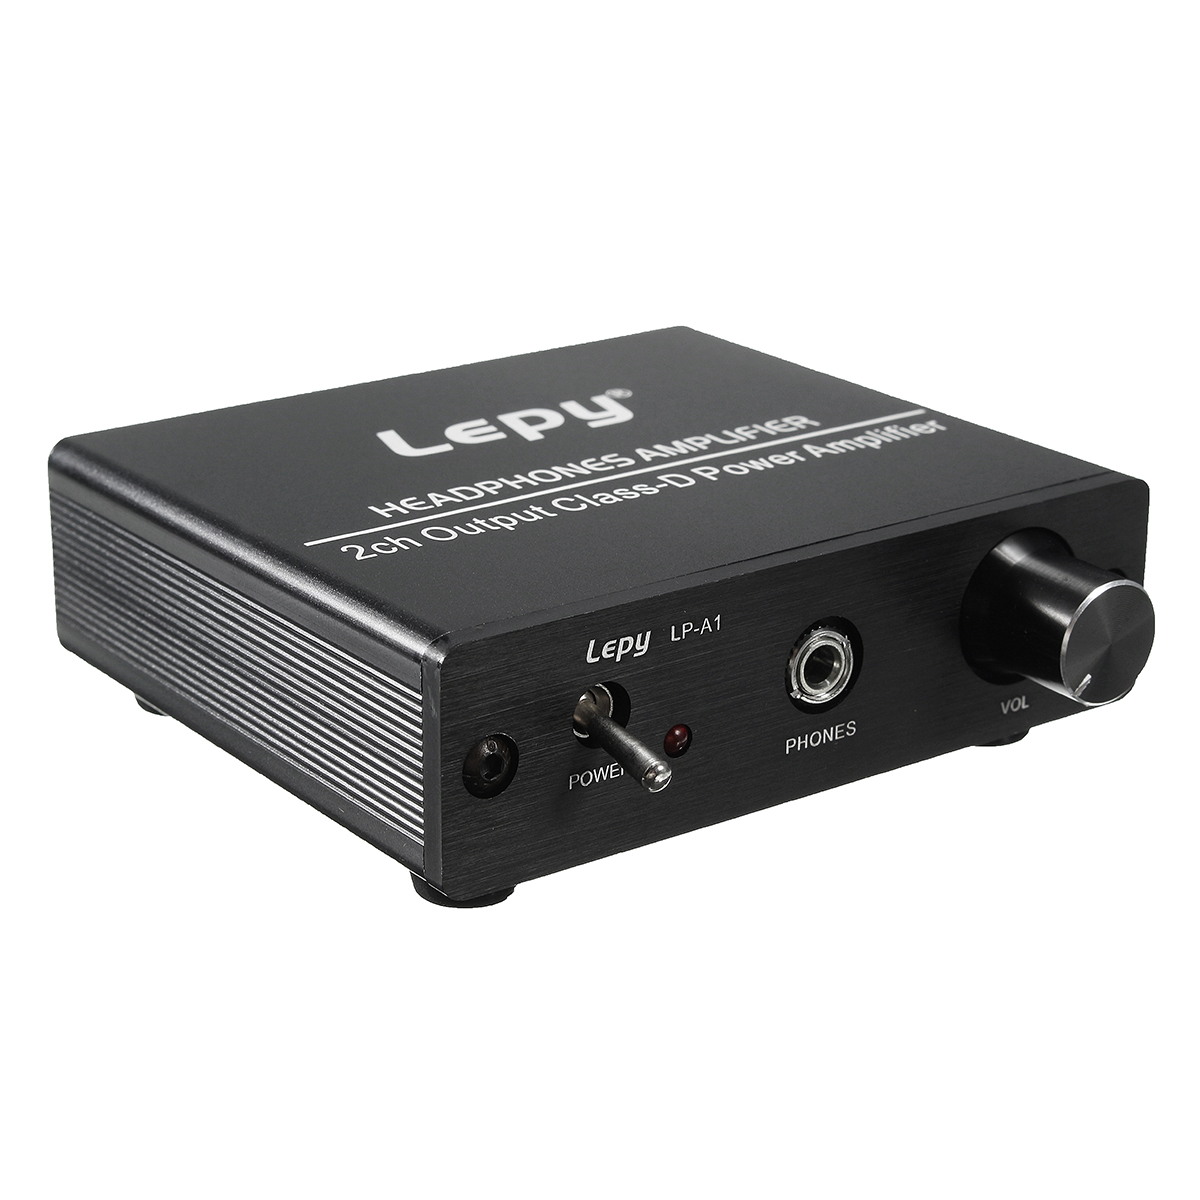 

LEPY LP-A1 Hi-Fi Stereo Audio Headphone Amplifier 2 Channel output Class D Power Amp